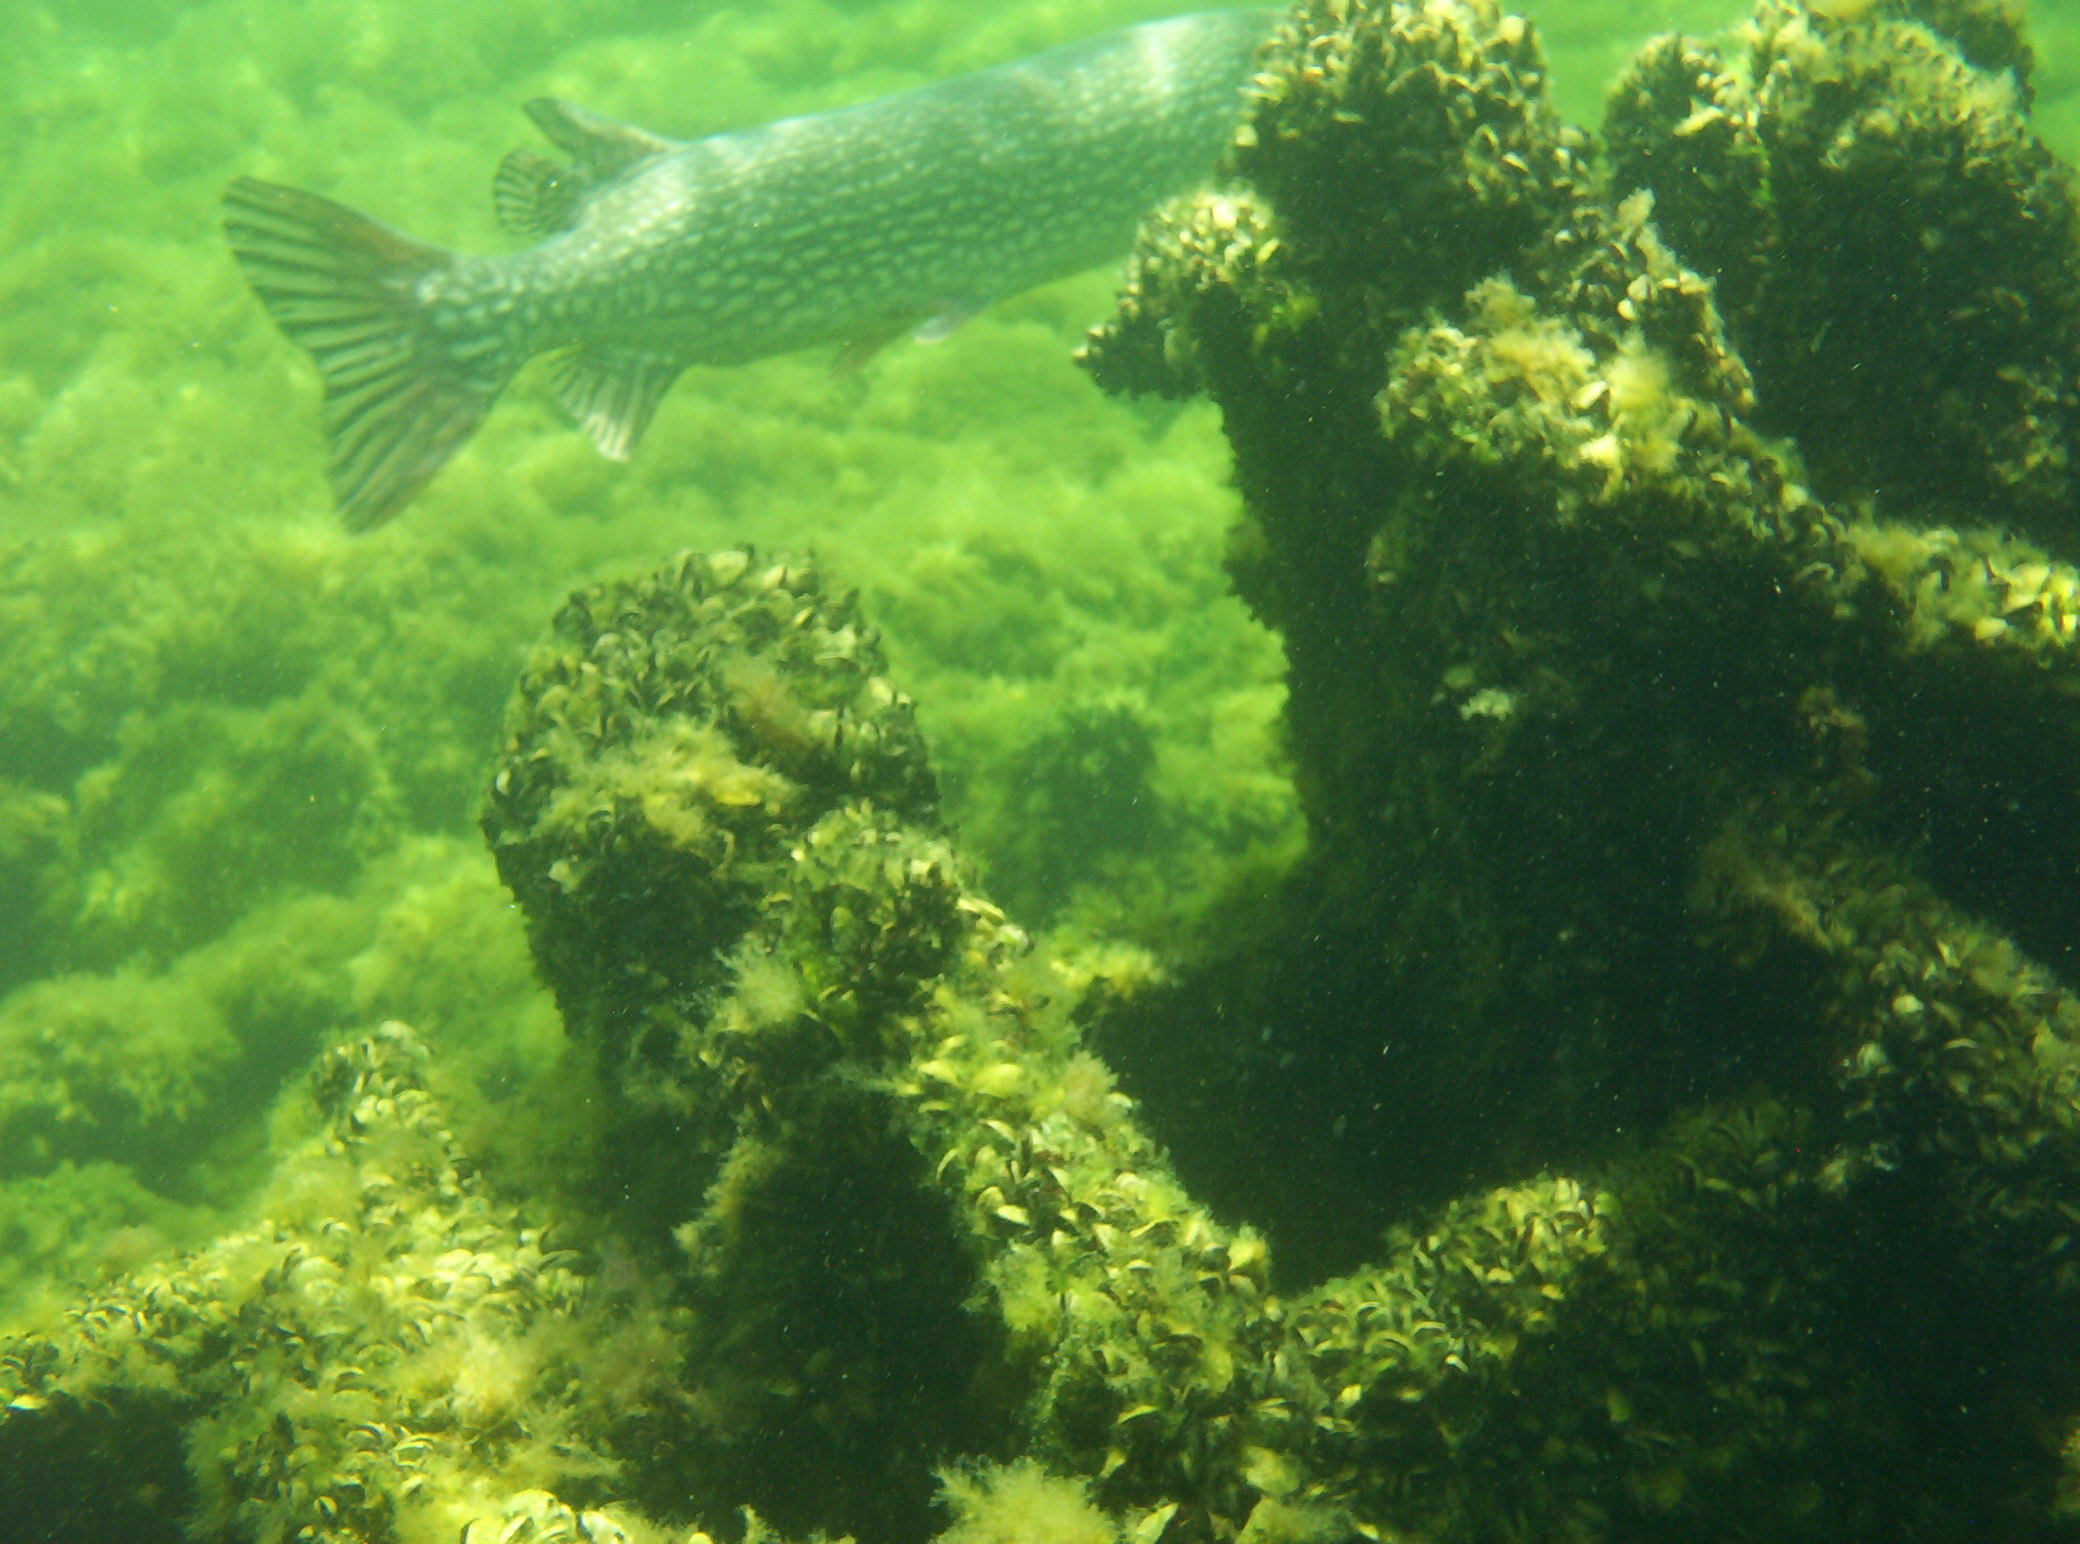 Northern fish on Louisiana wreck